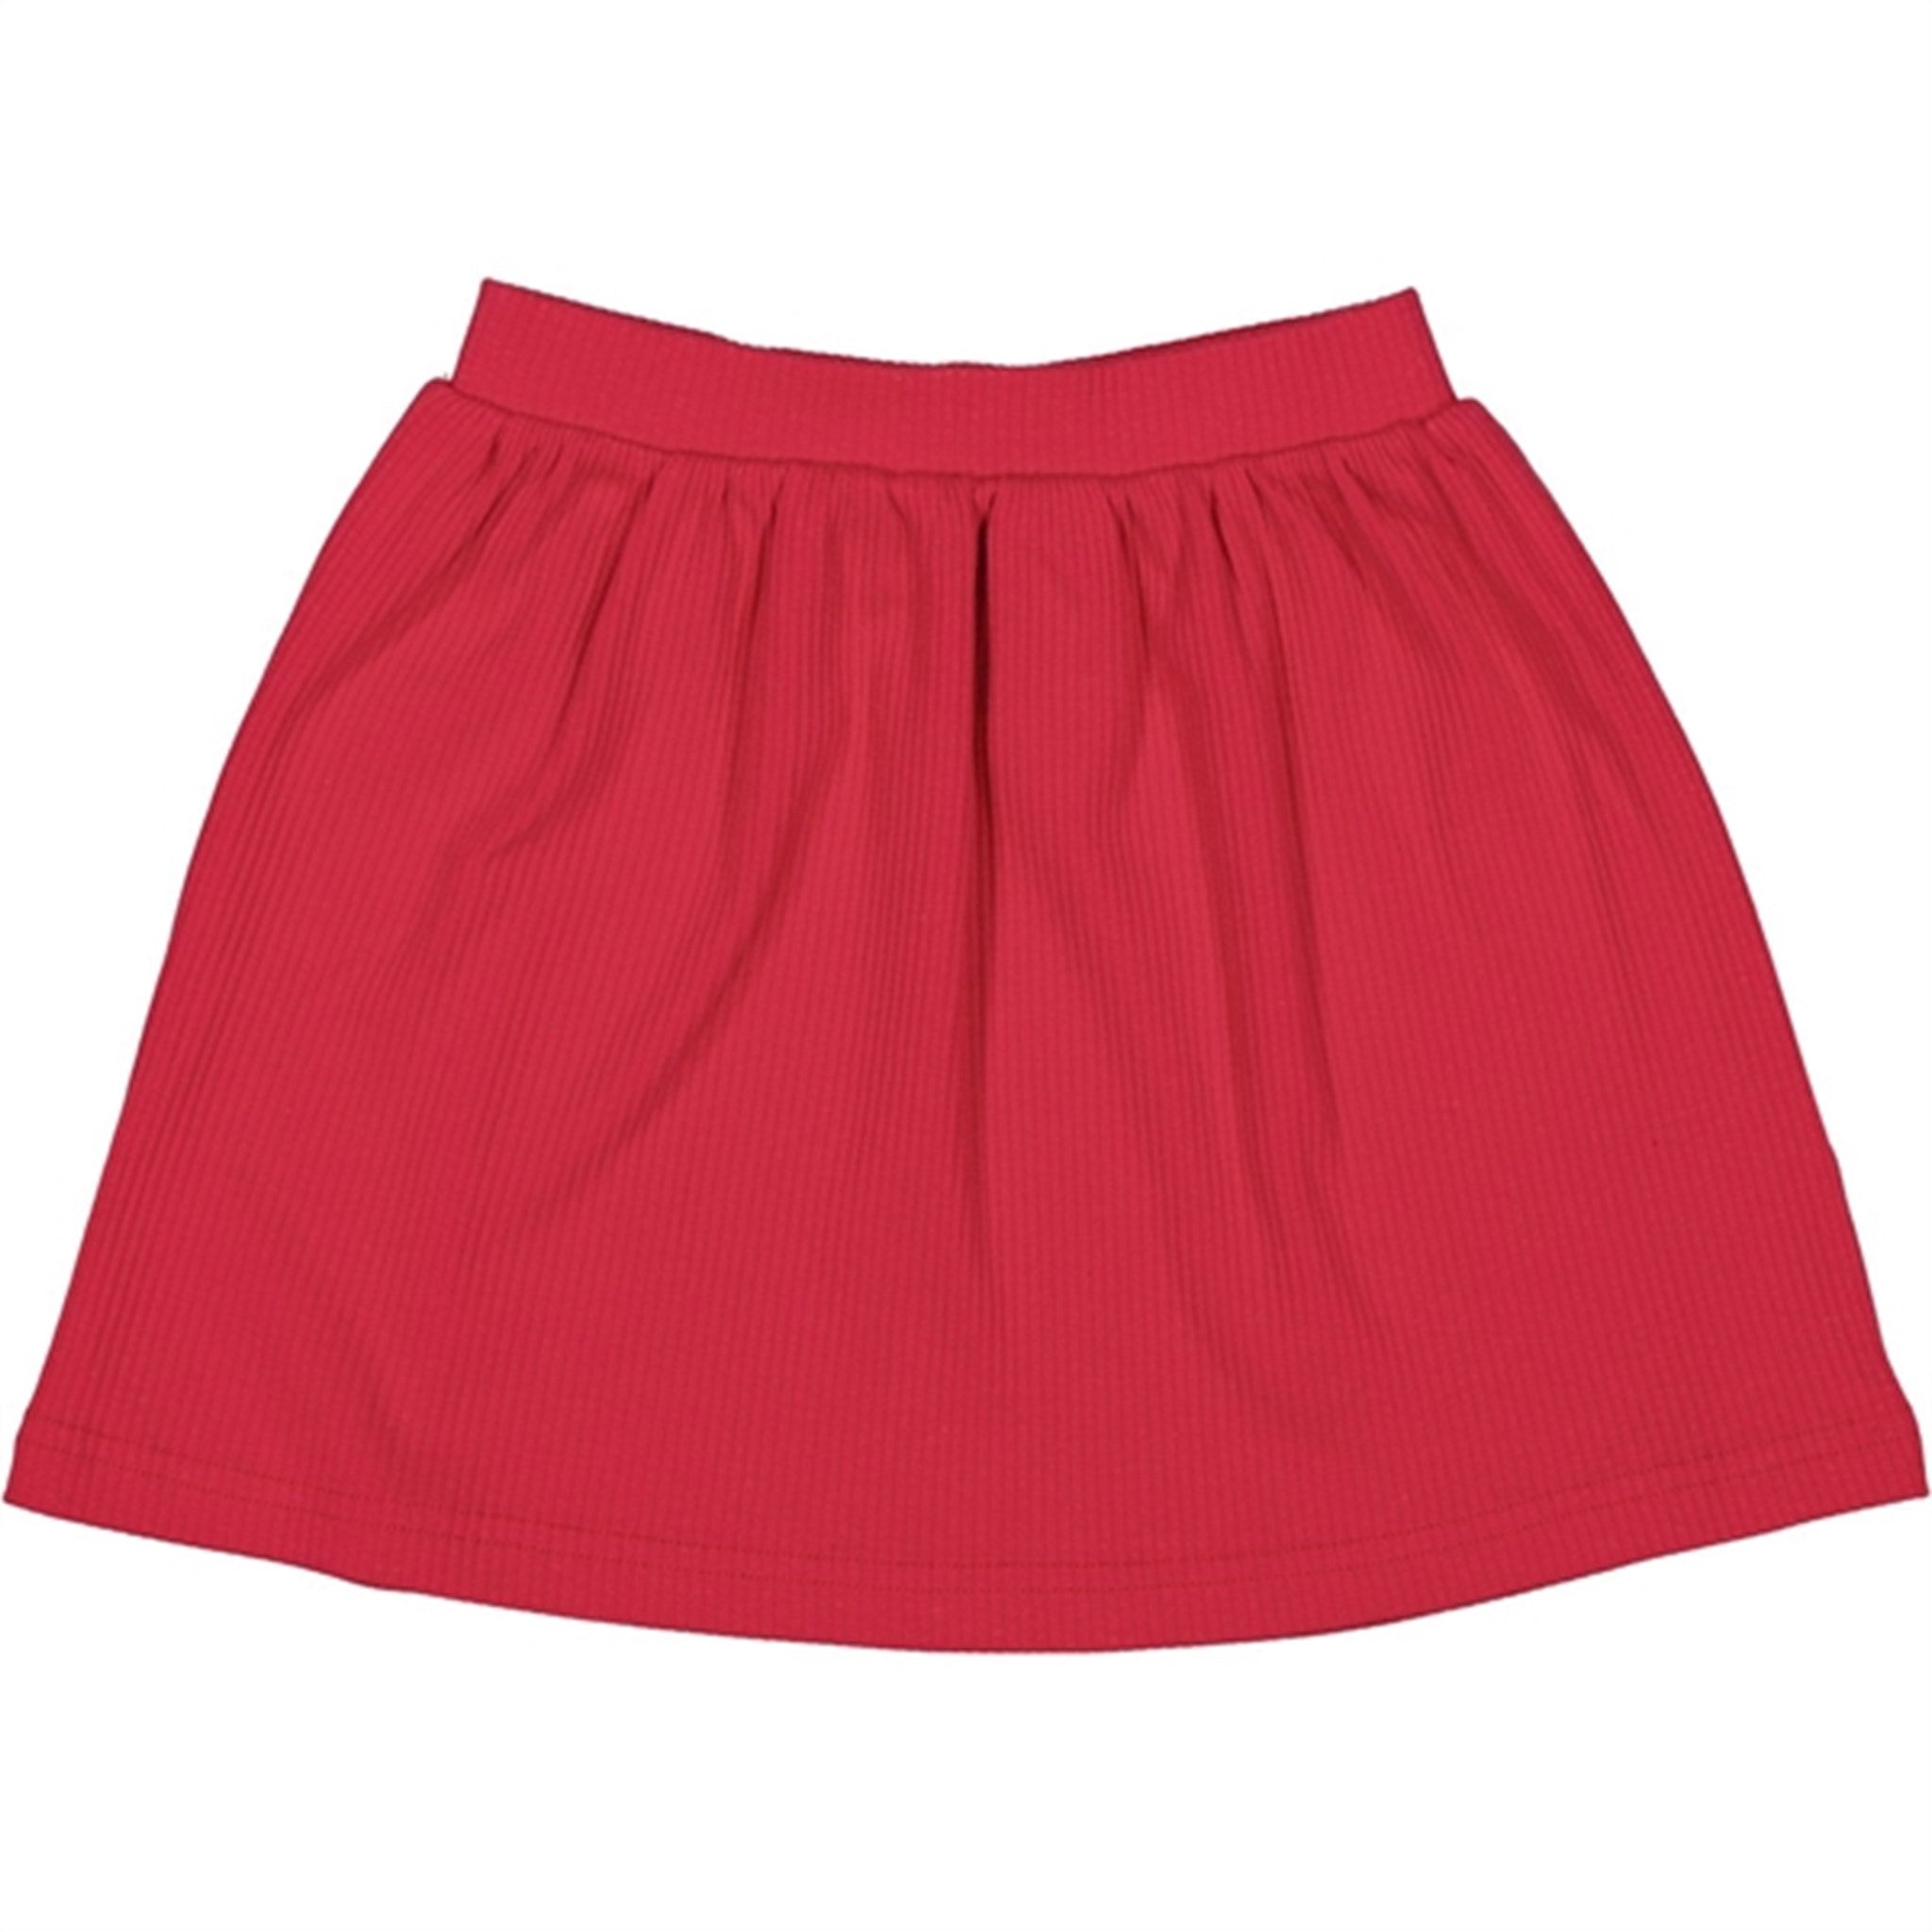 MarMar Modal Red Currant Skirt